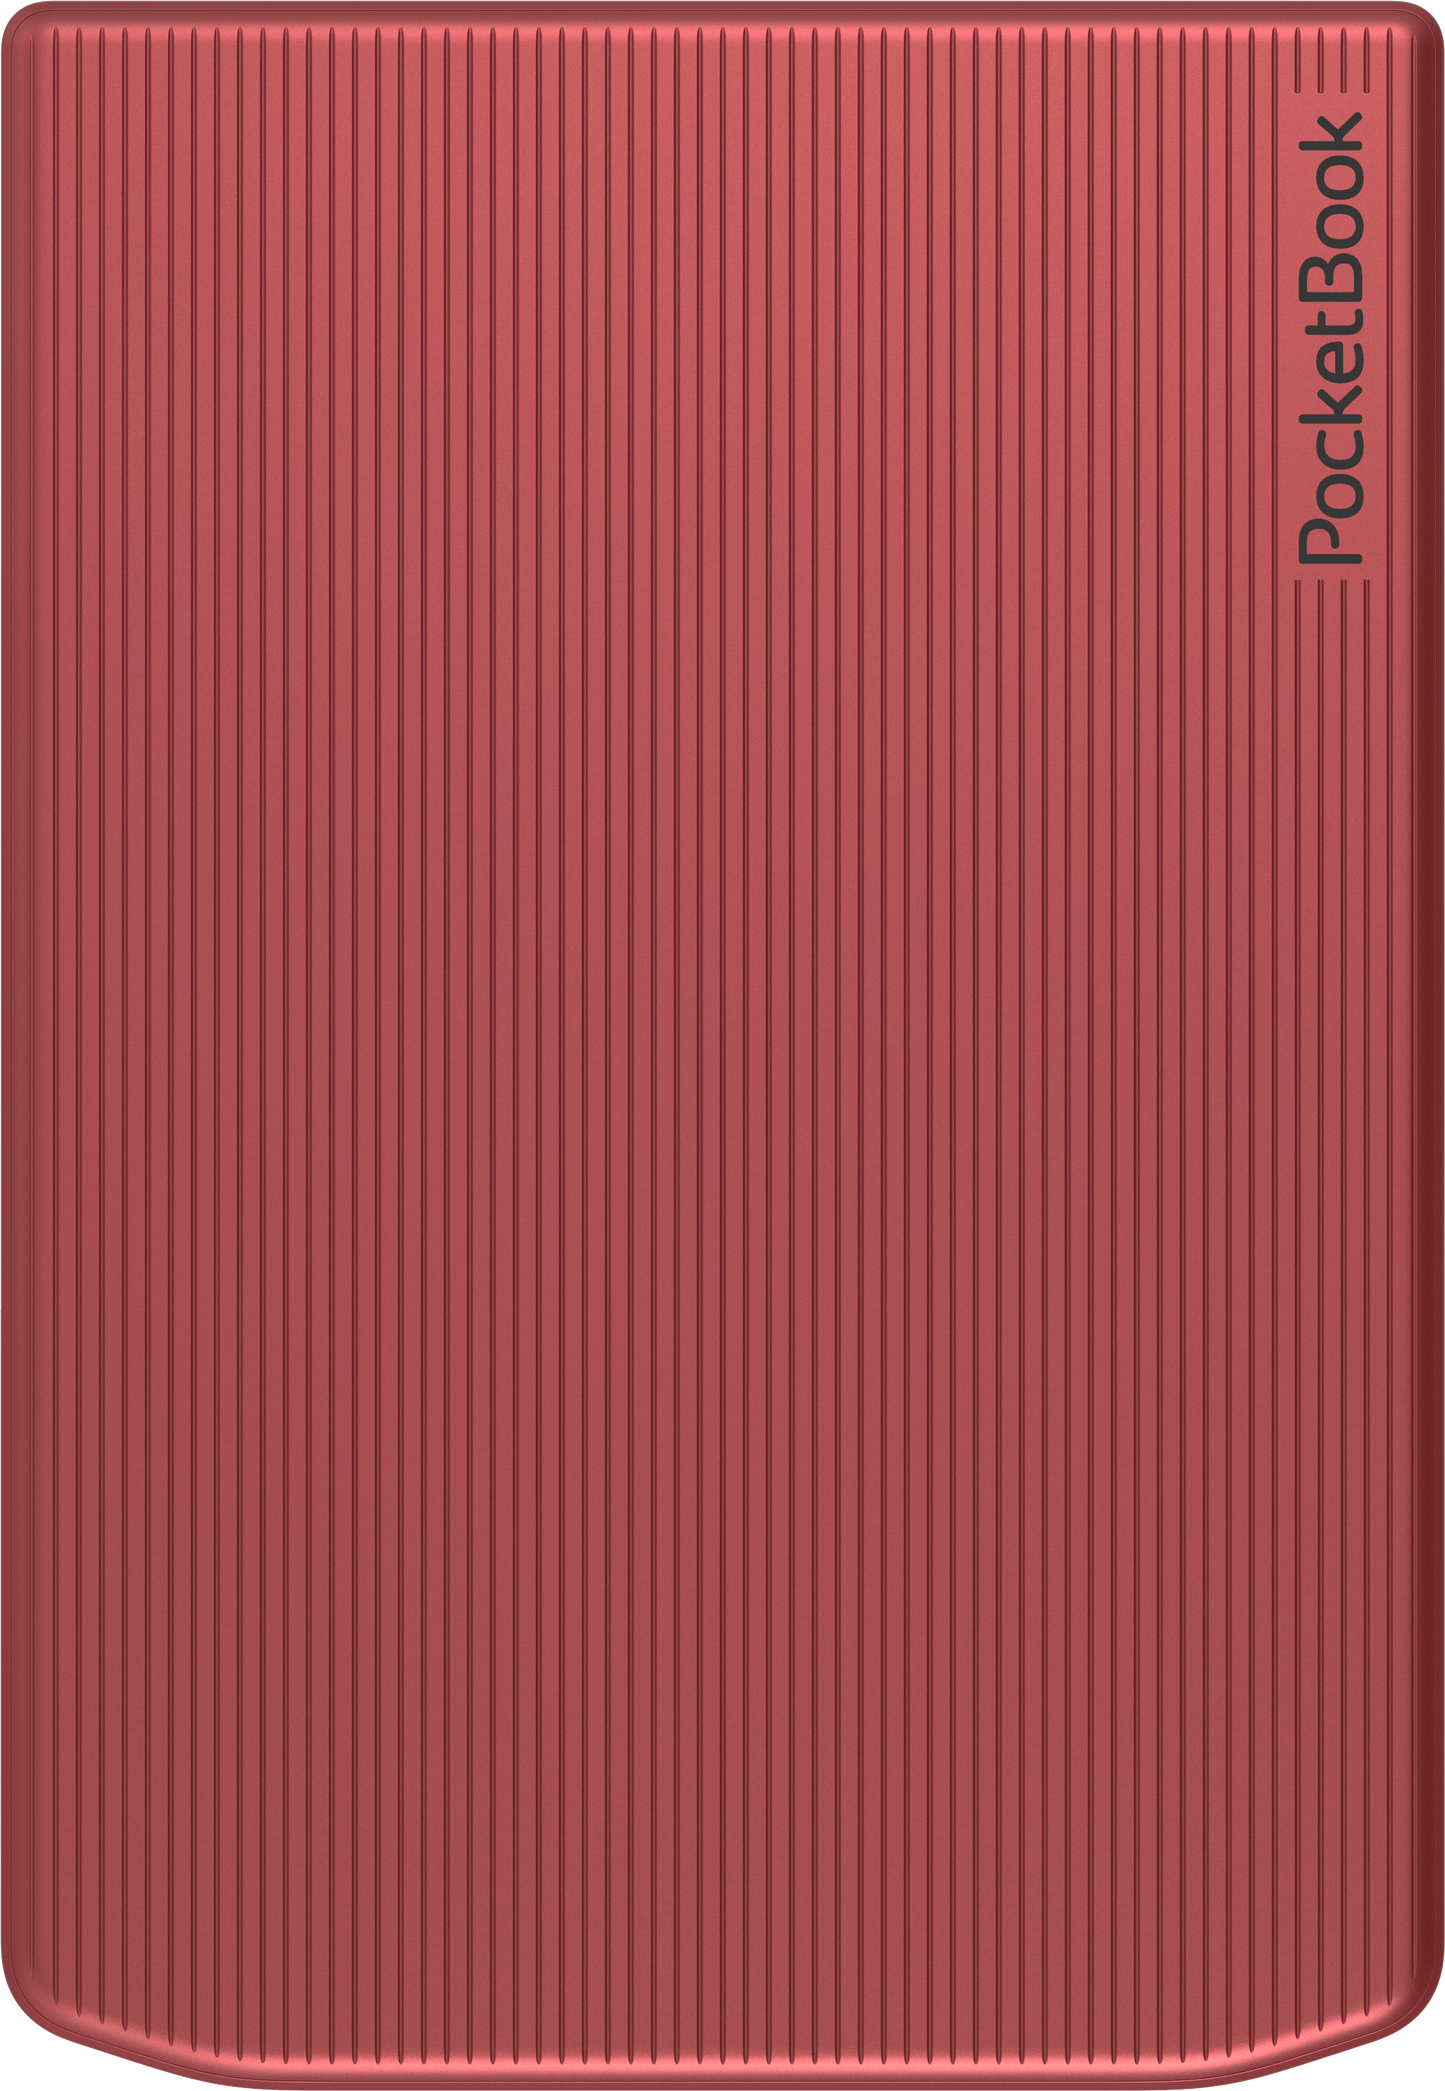 Pocketbook Verse Pro ebook reader